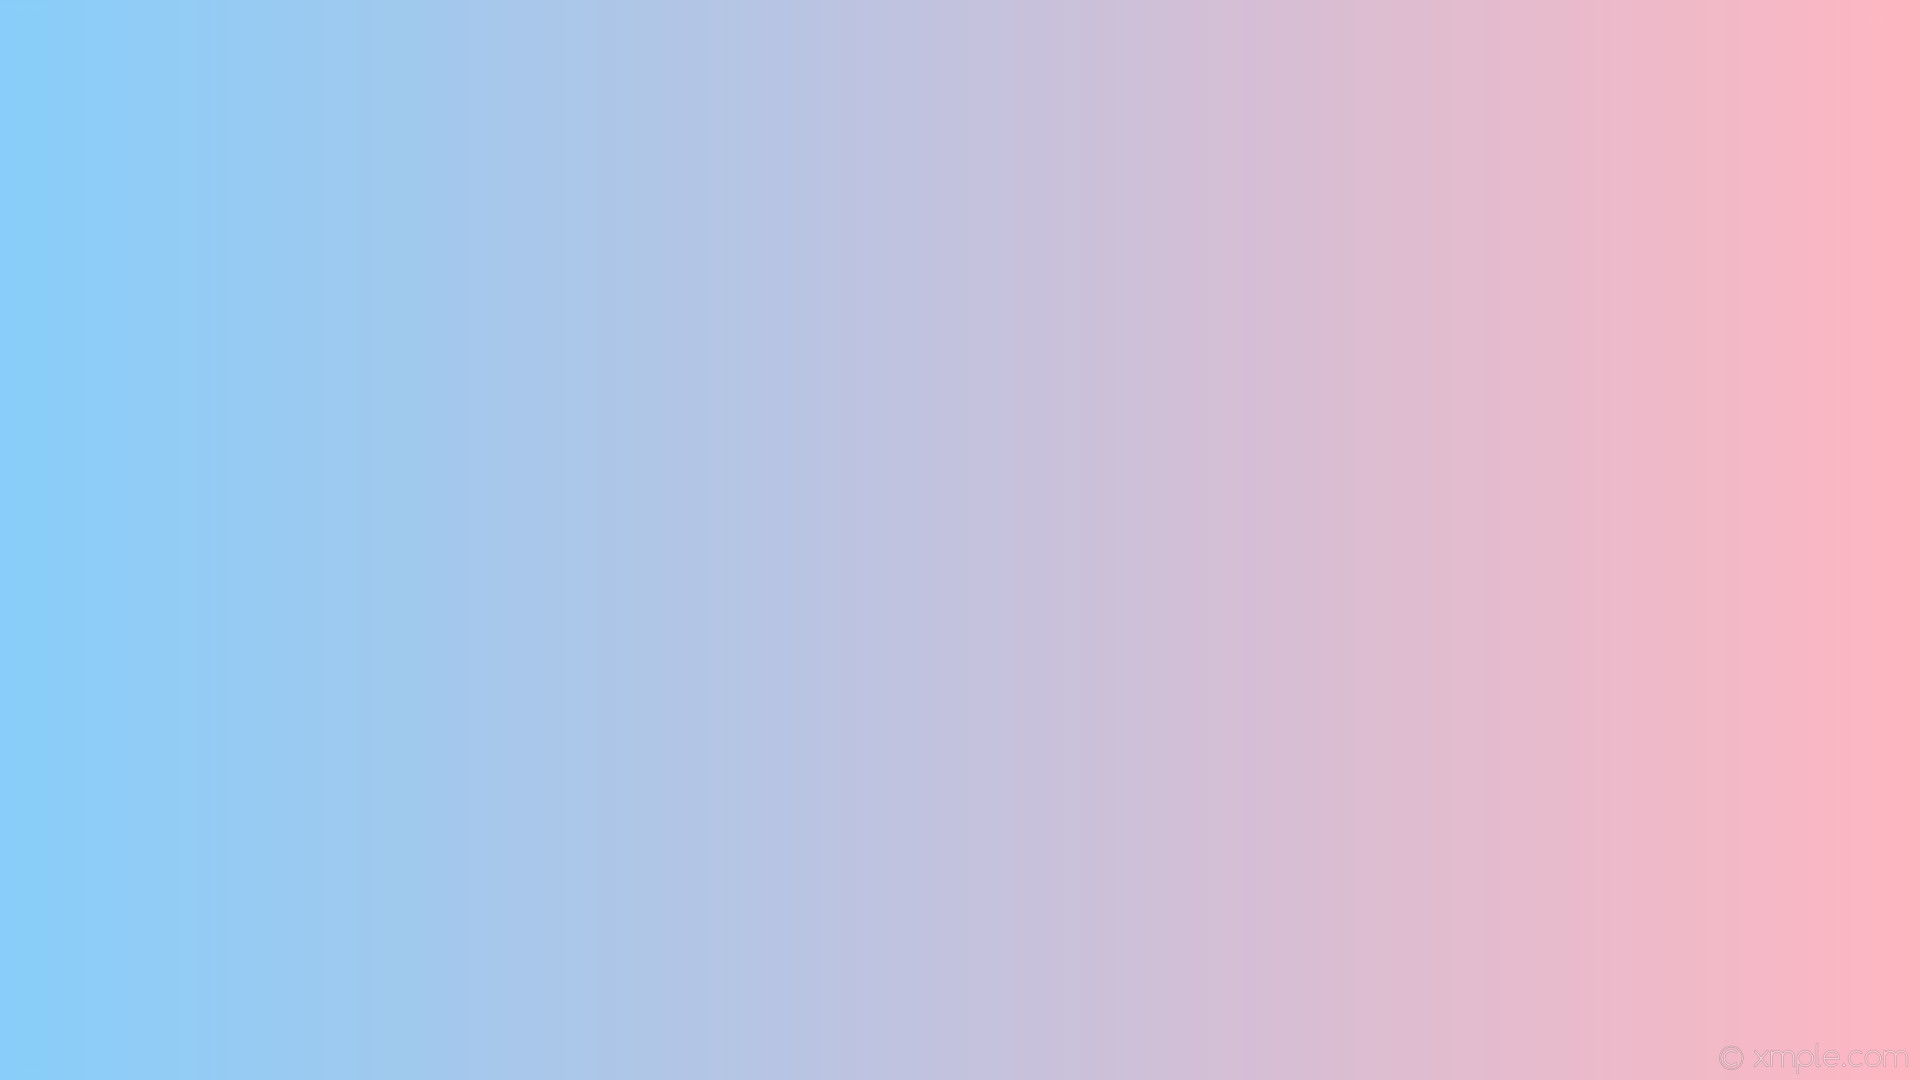 1920x1080 wallpaper blue pink gradient linear light pink light sky blue #ffb6c1  #87cefa 0Â°